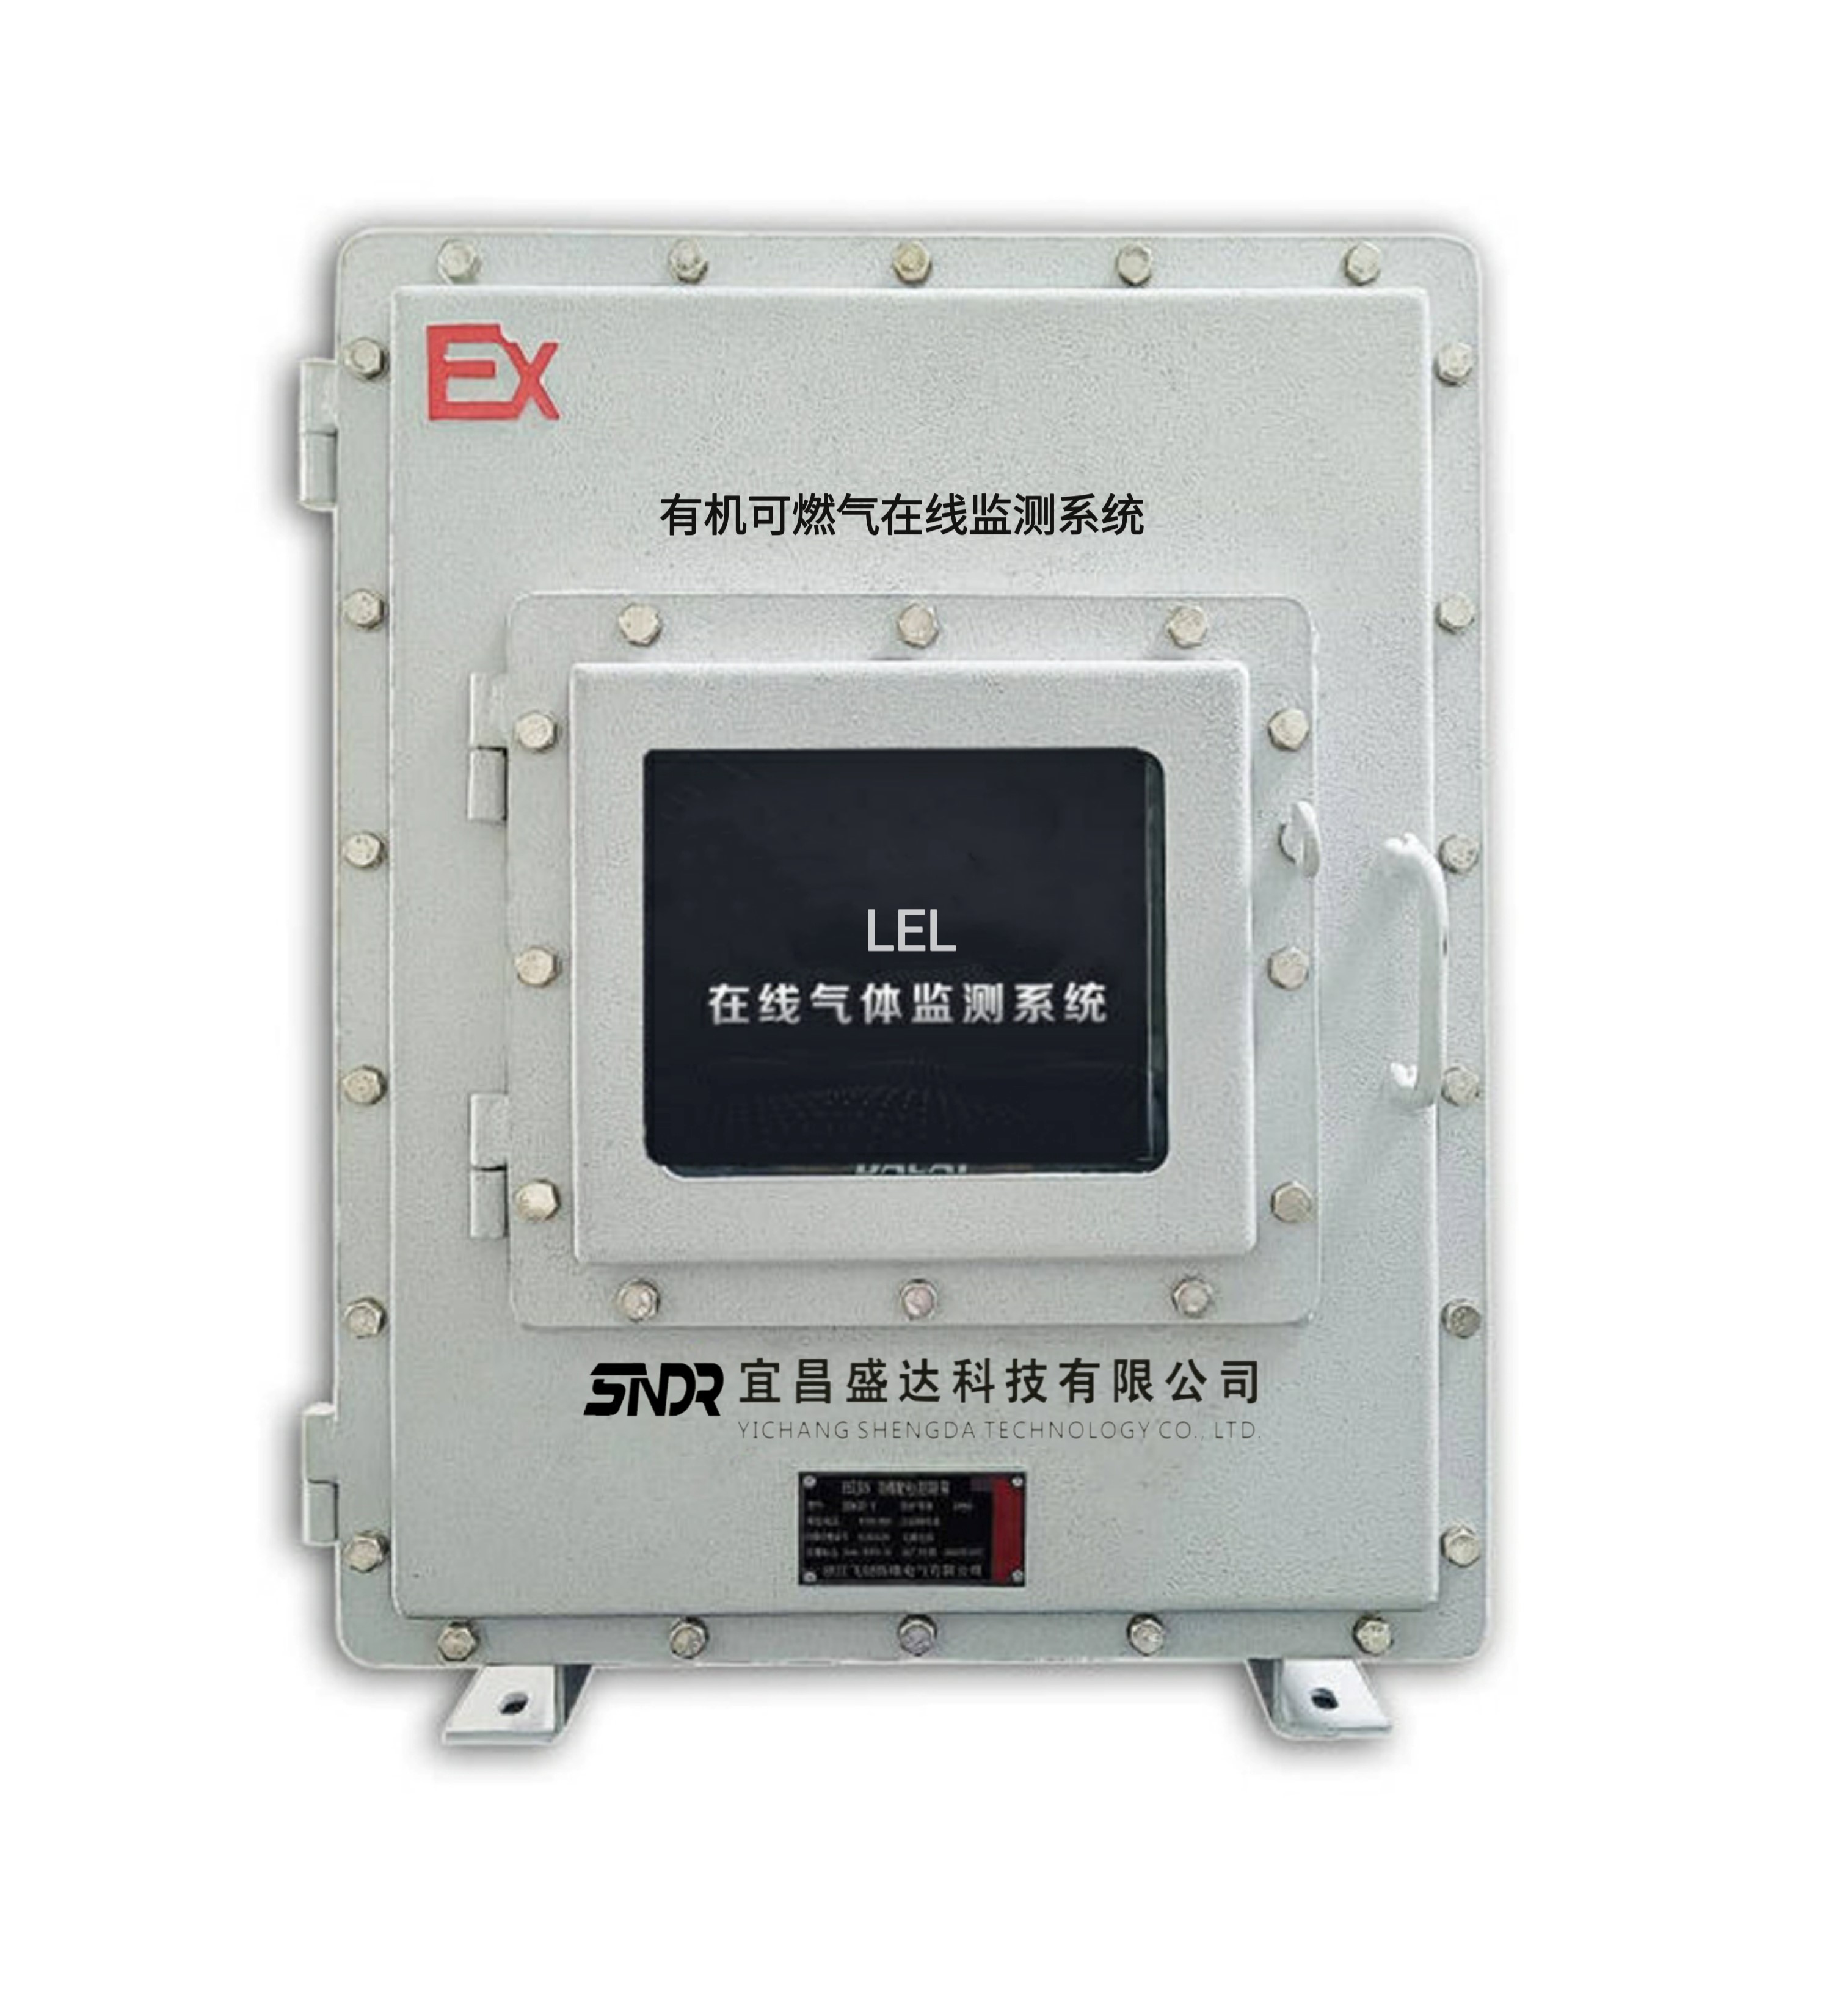 SD-R20-EX防爆型可燃气体浓度在线监测仪